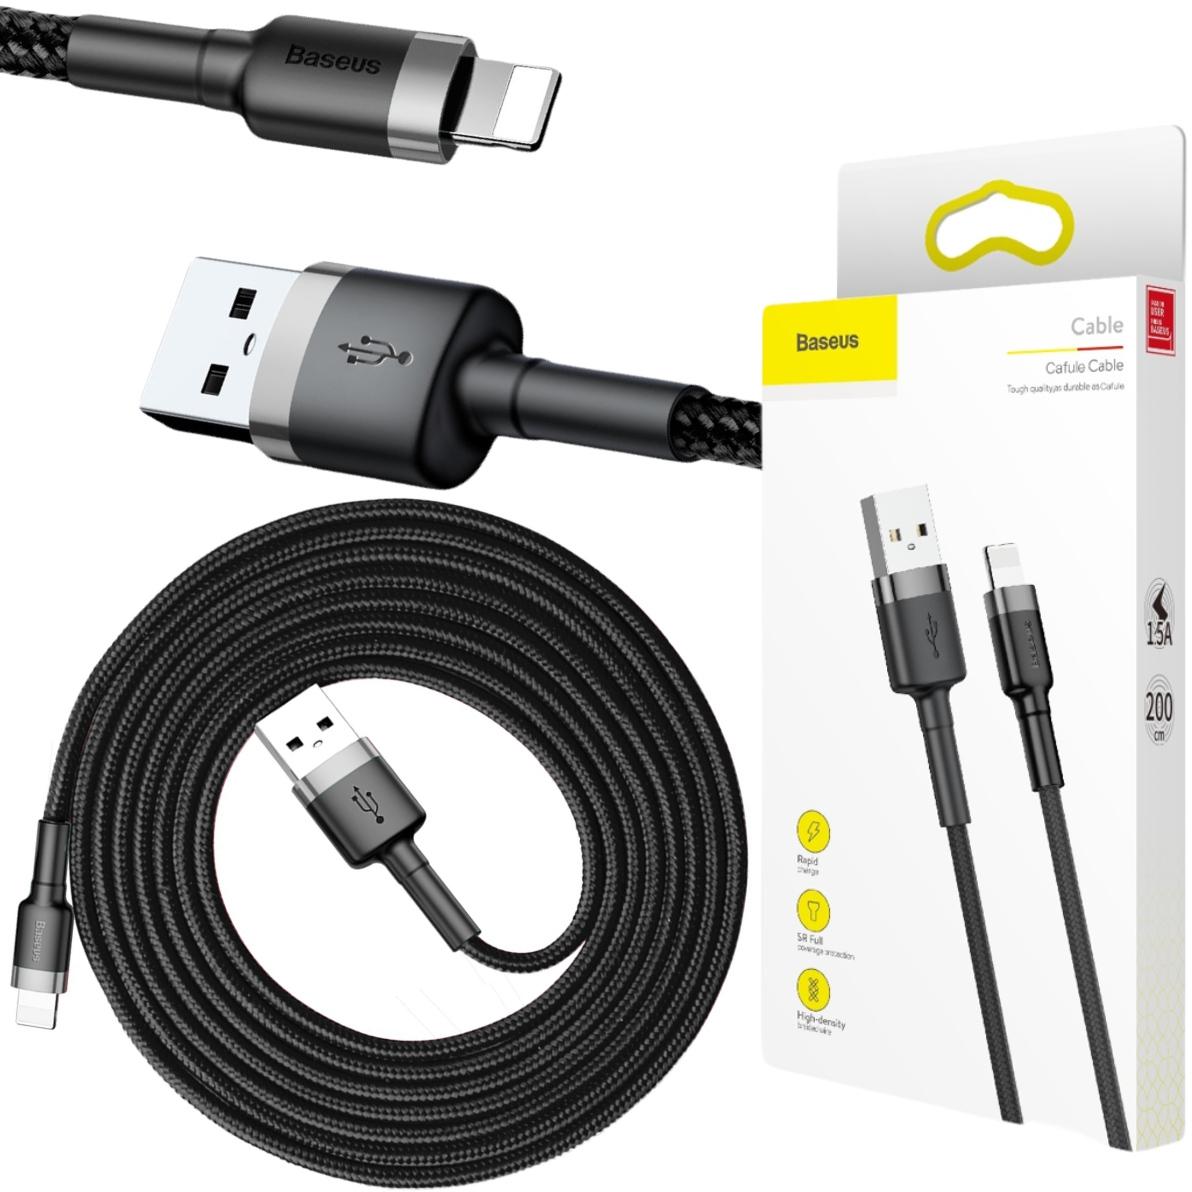 Baseus Cafule Cable nylonowy kabel USB / Lightning QC 3.0 1,5 A 2 m CALKLF-RG1 – najważniejsze cechy: